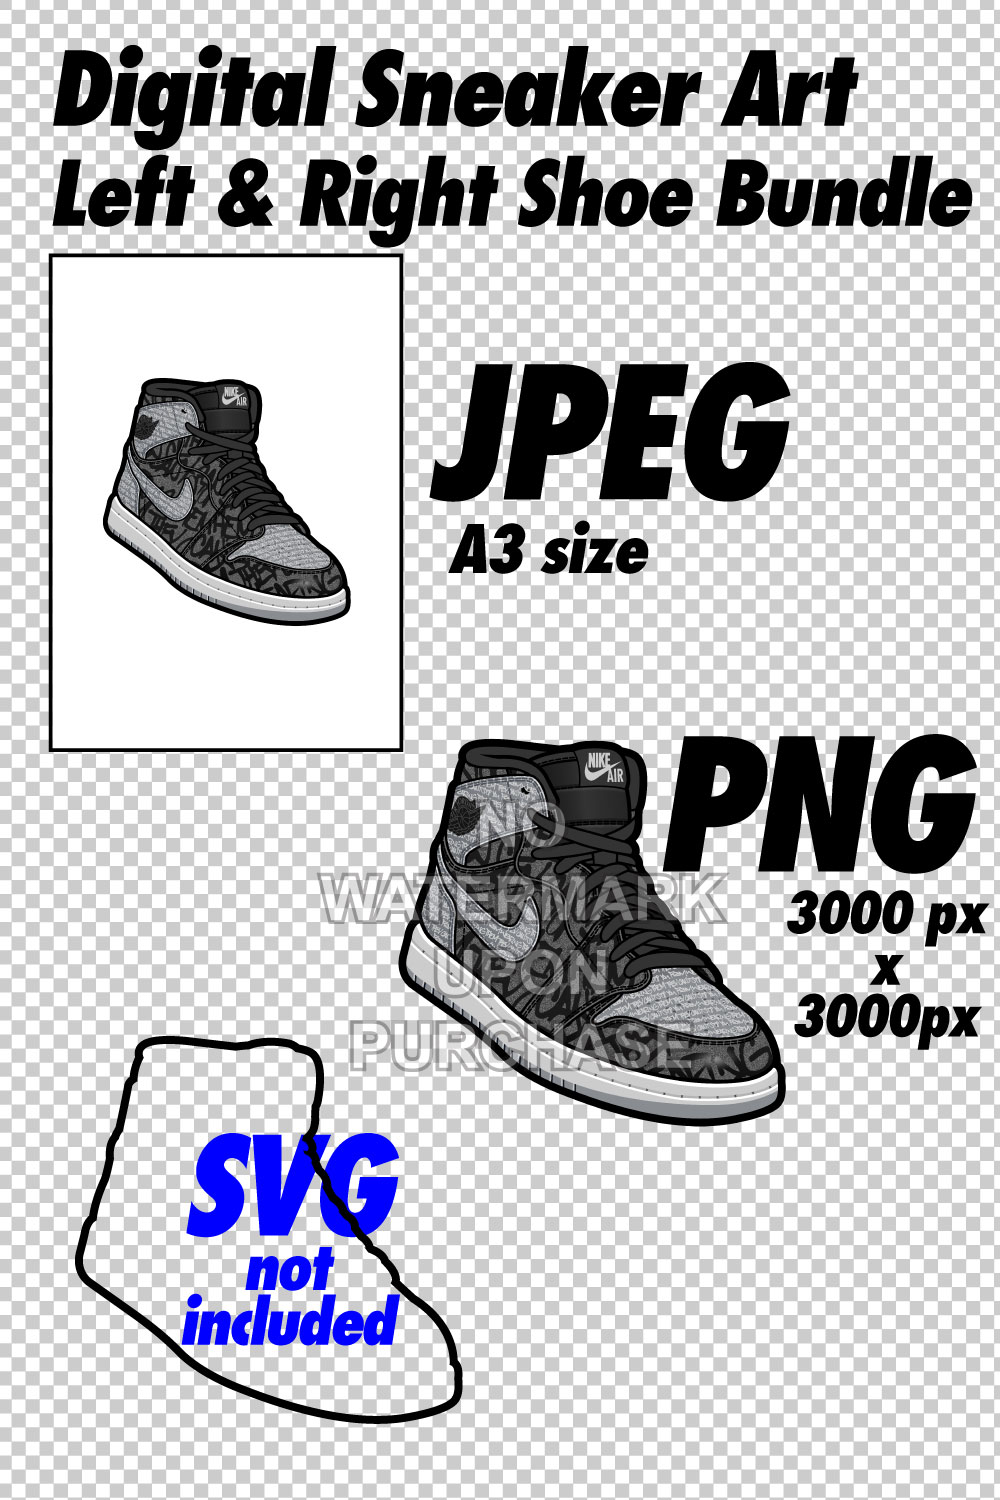 Air Jordan 1 Rebellionaire JPEG PNG Left & Right shoe digital download pinterest preview image.